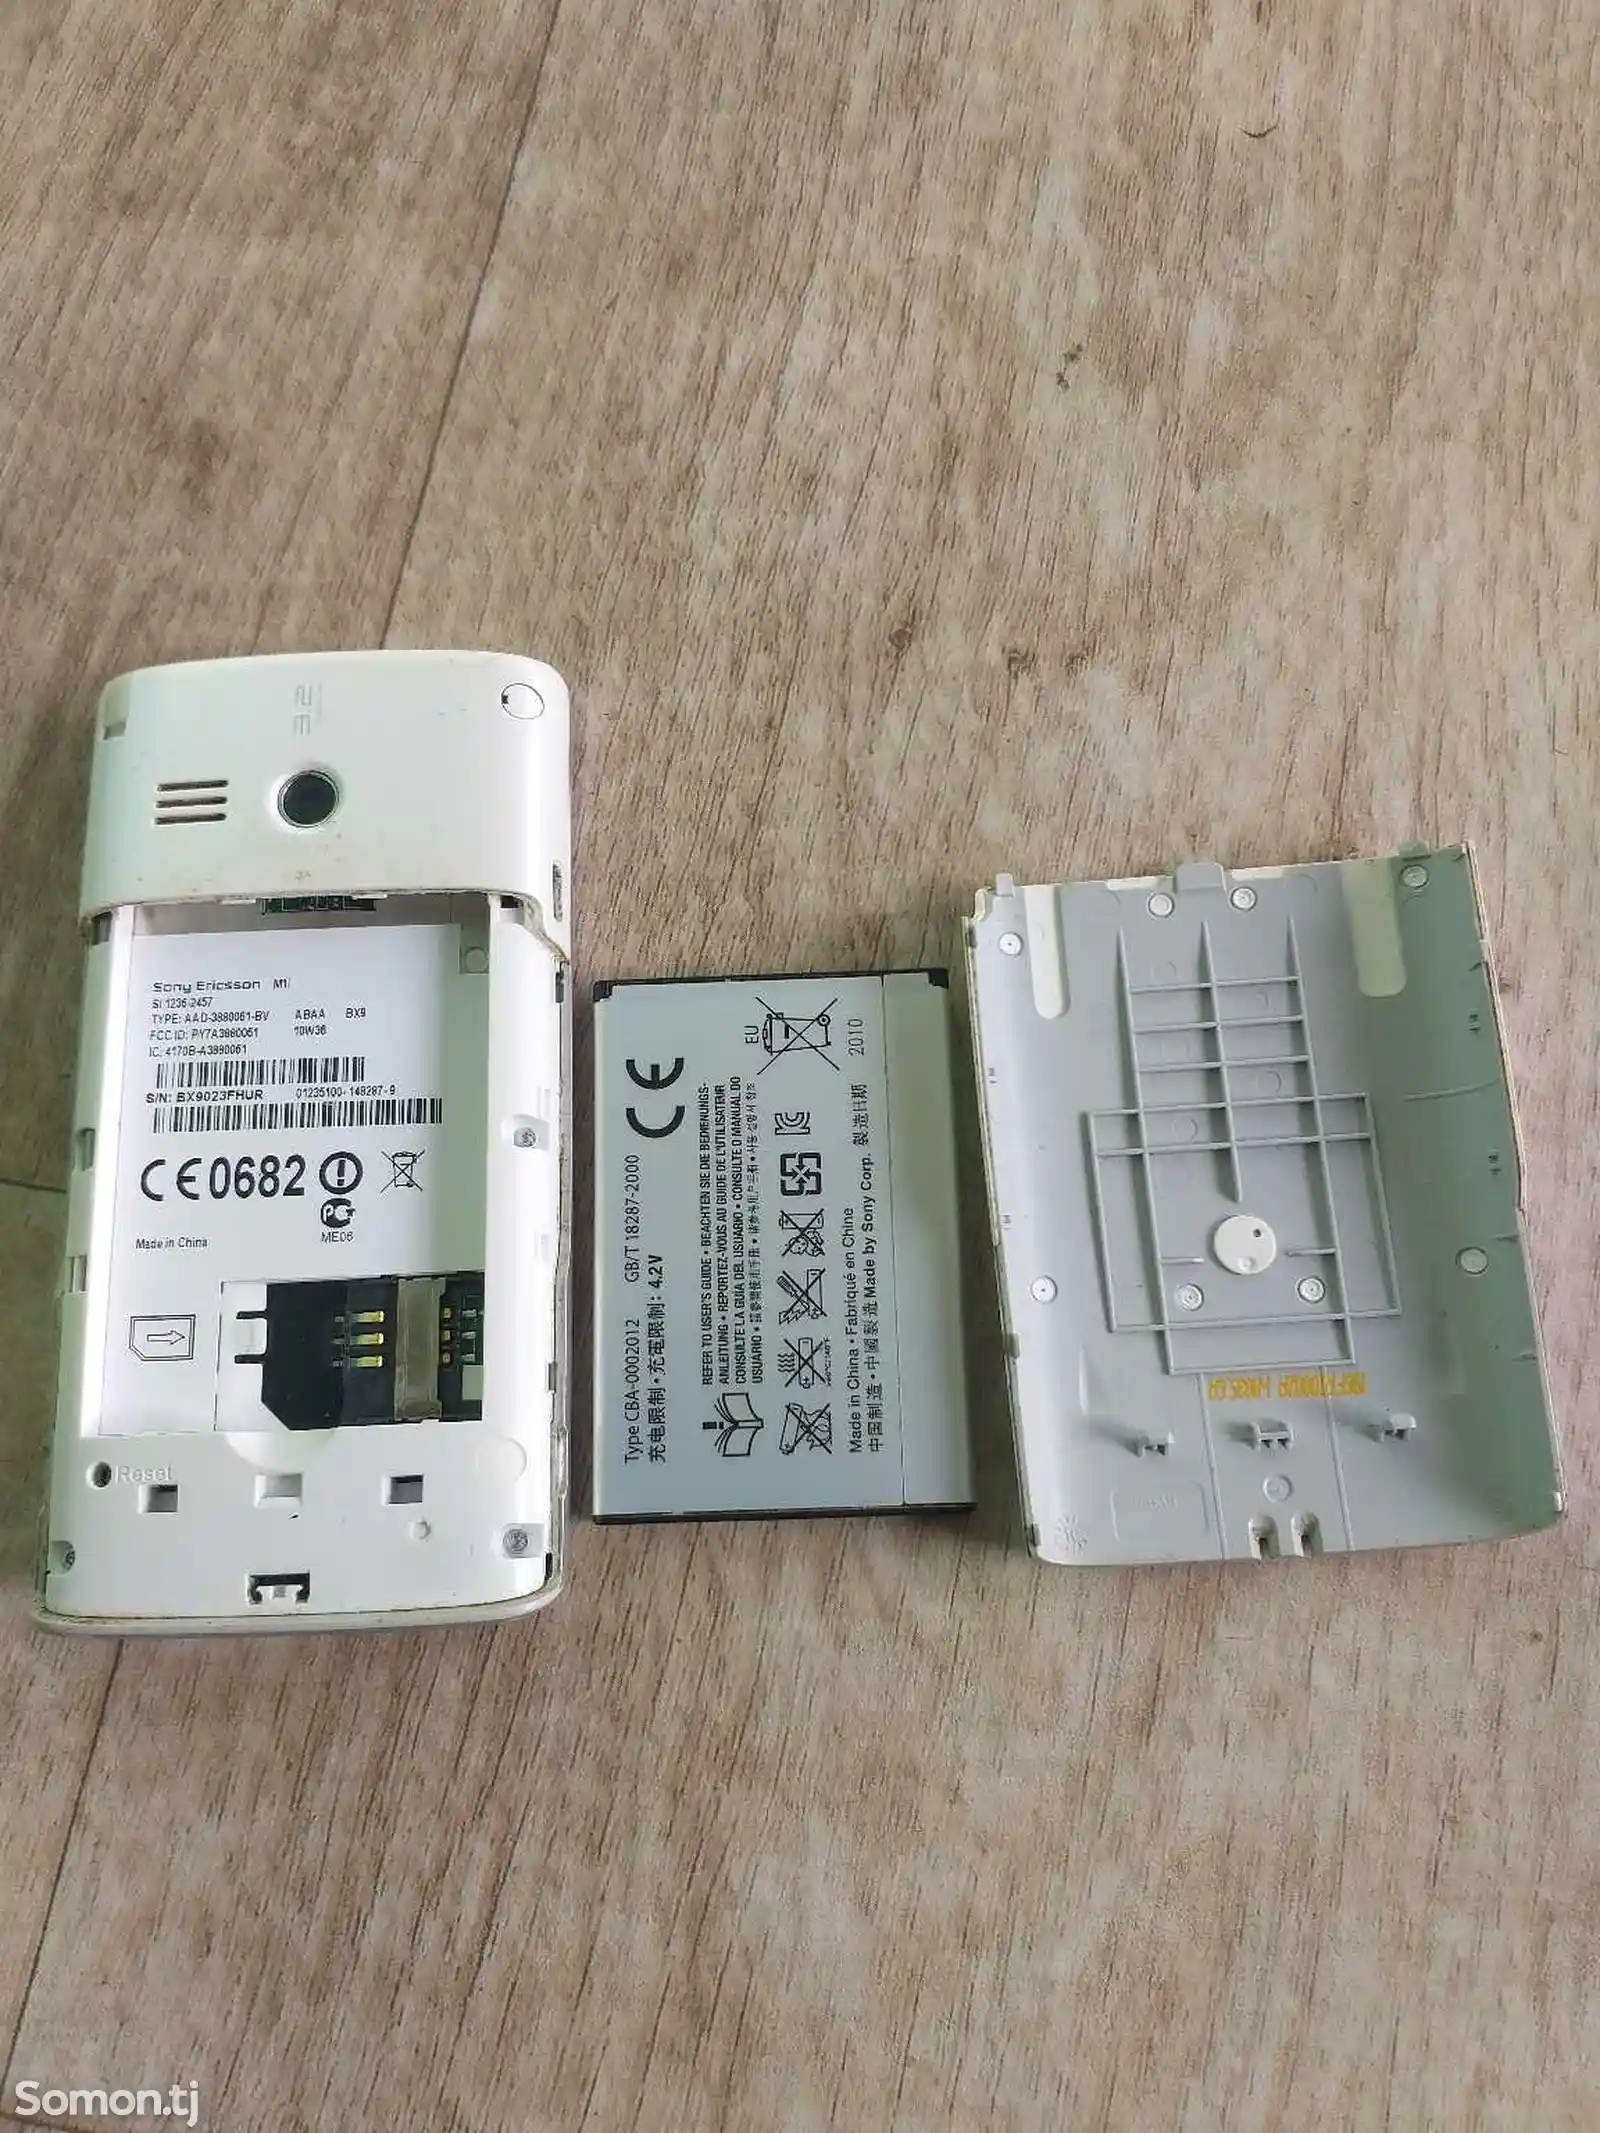 Sony Ericsson M1i-4